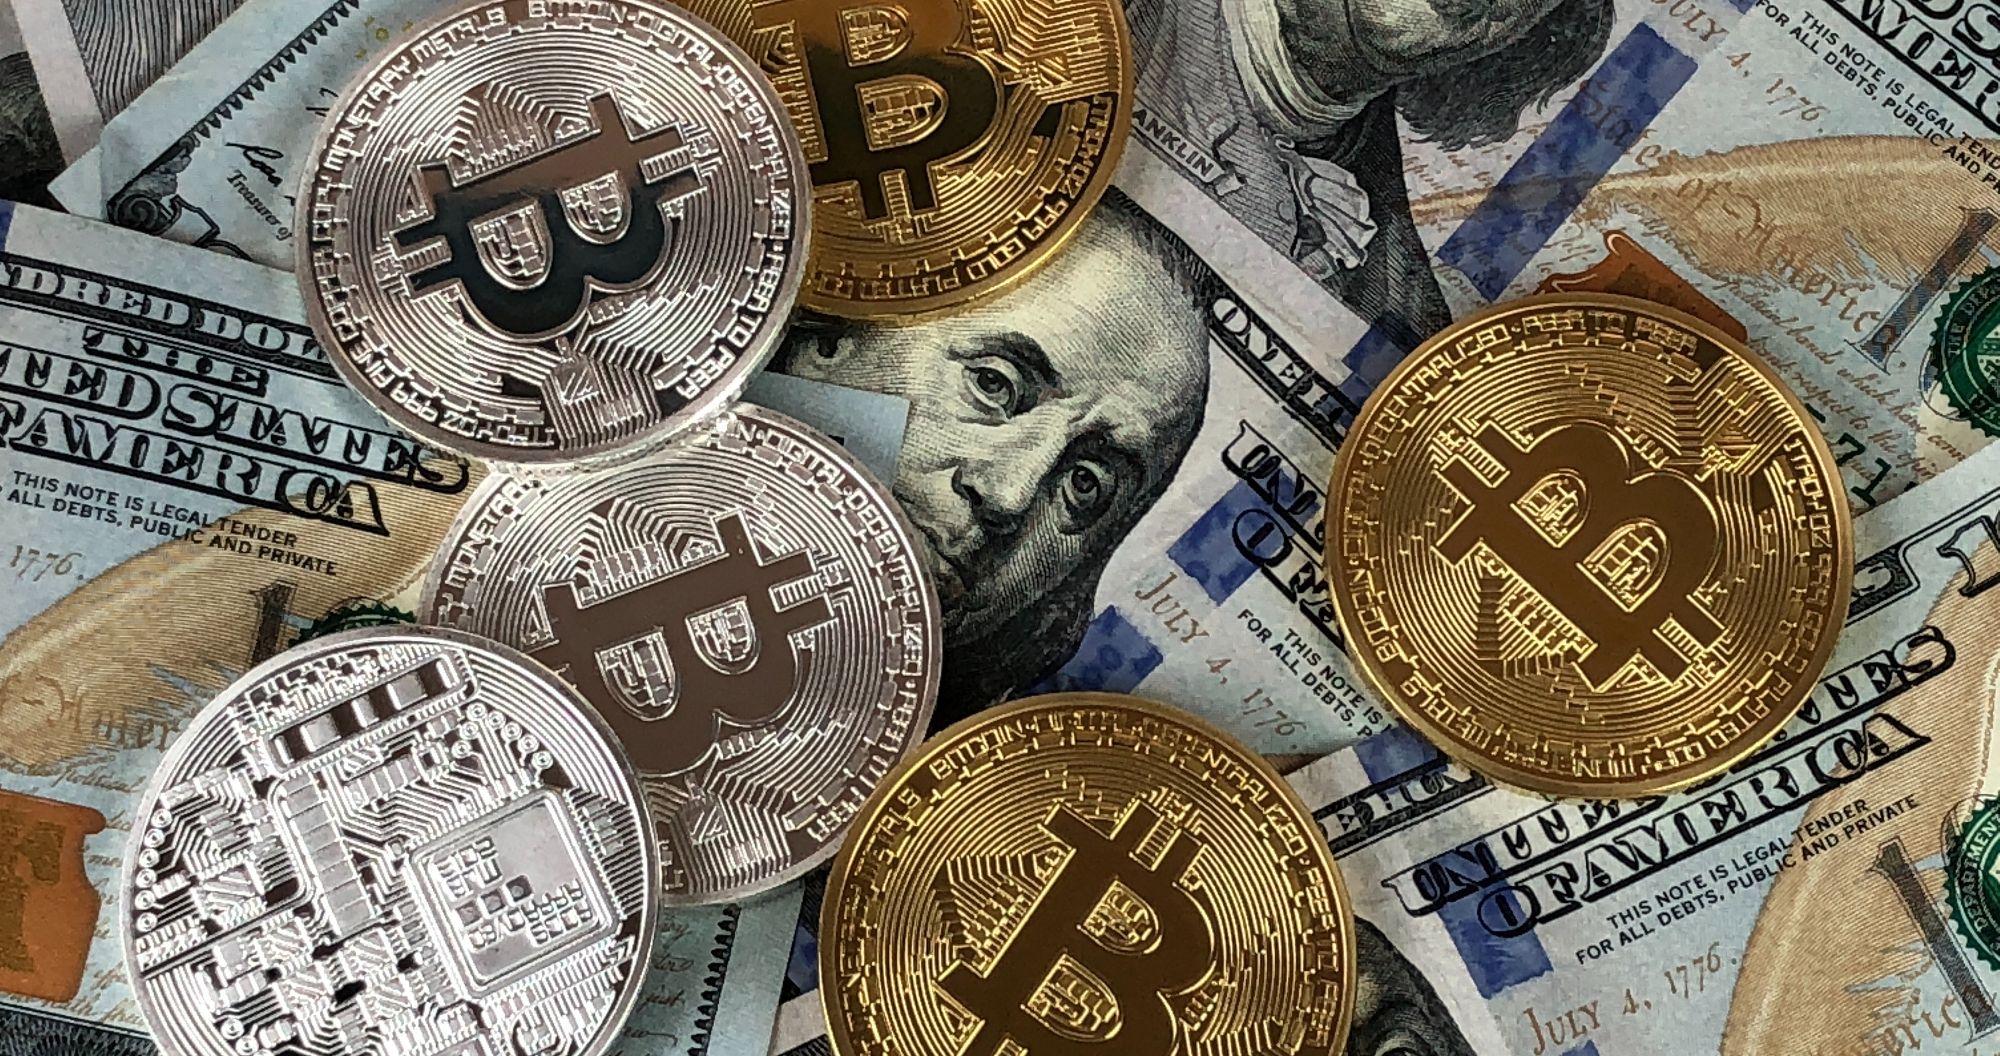 bitcoins on top of hundred dollar bills